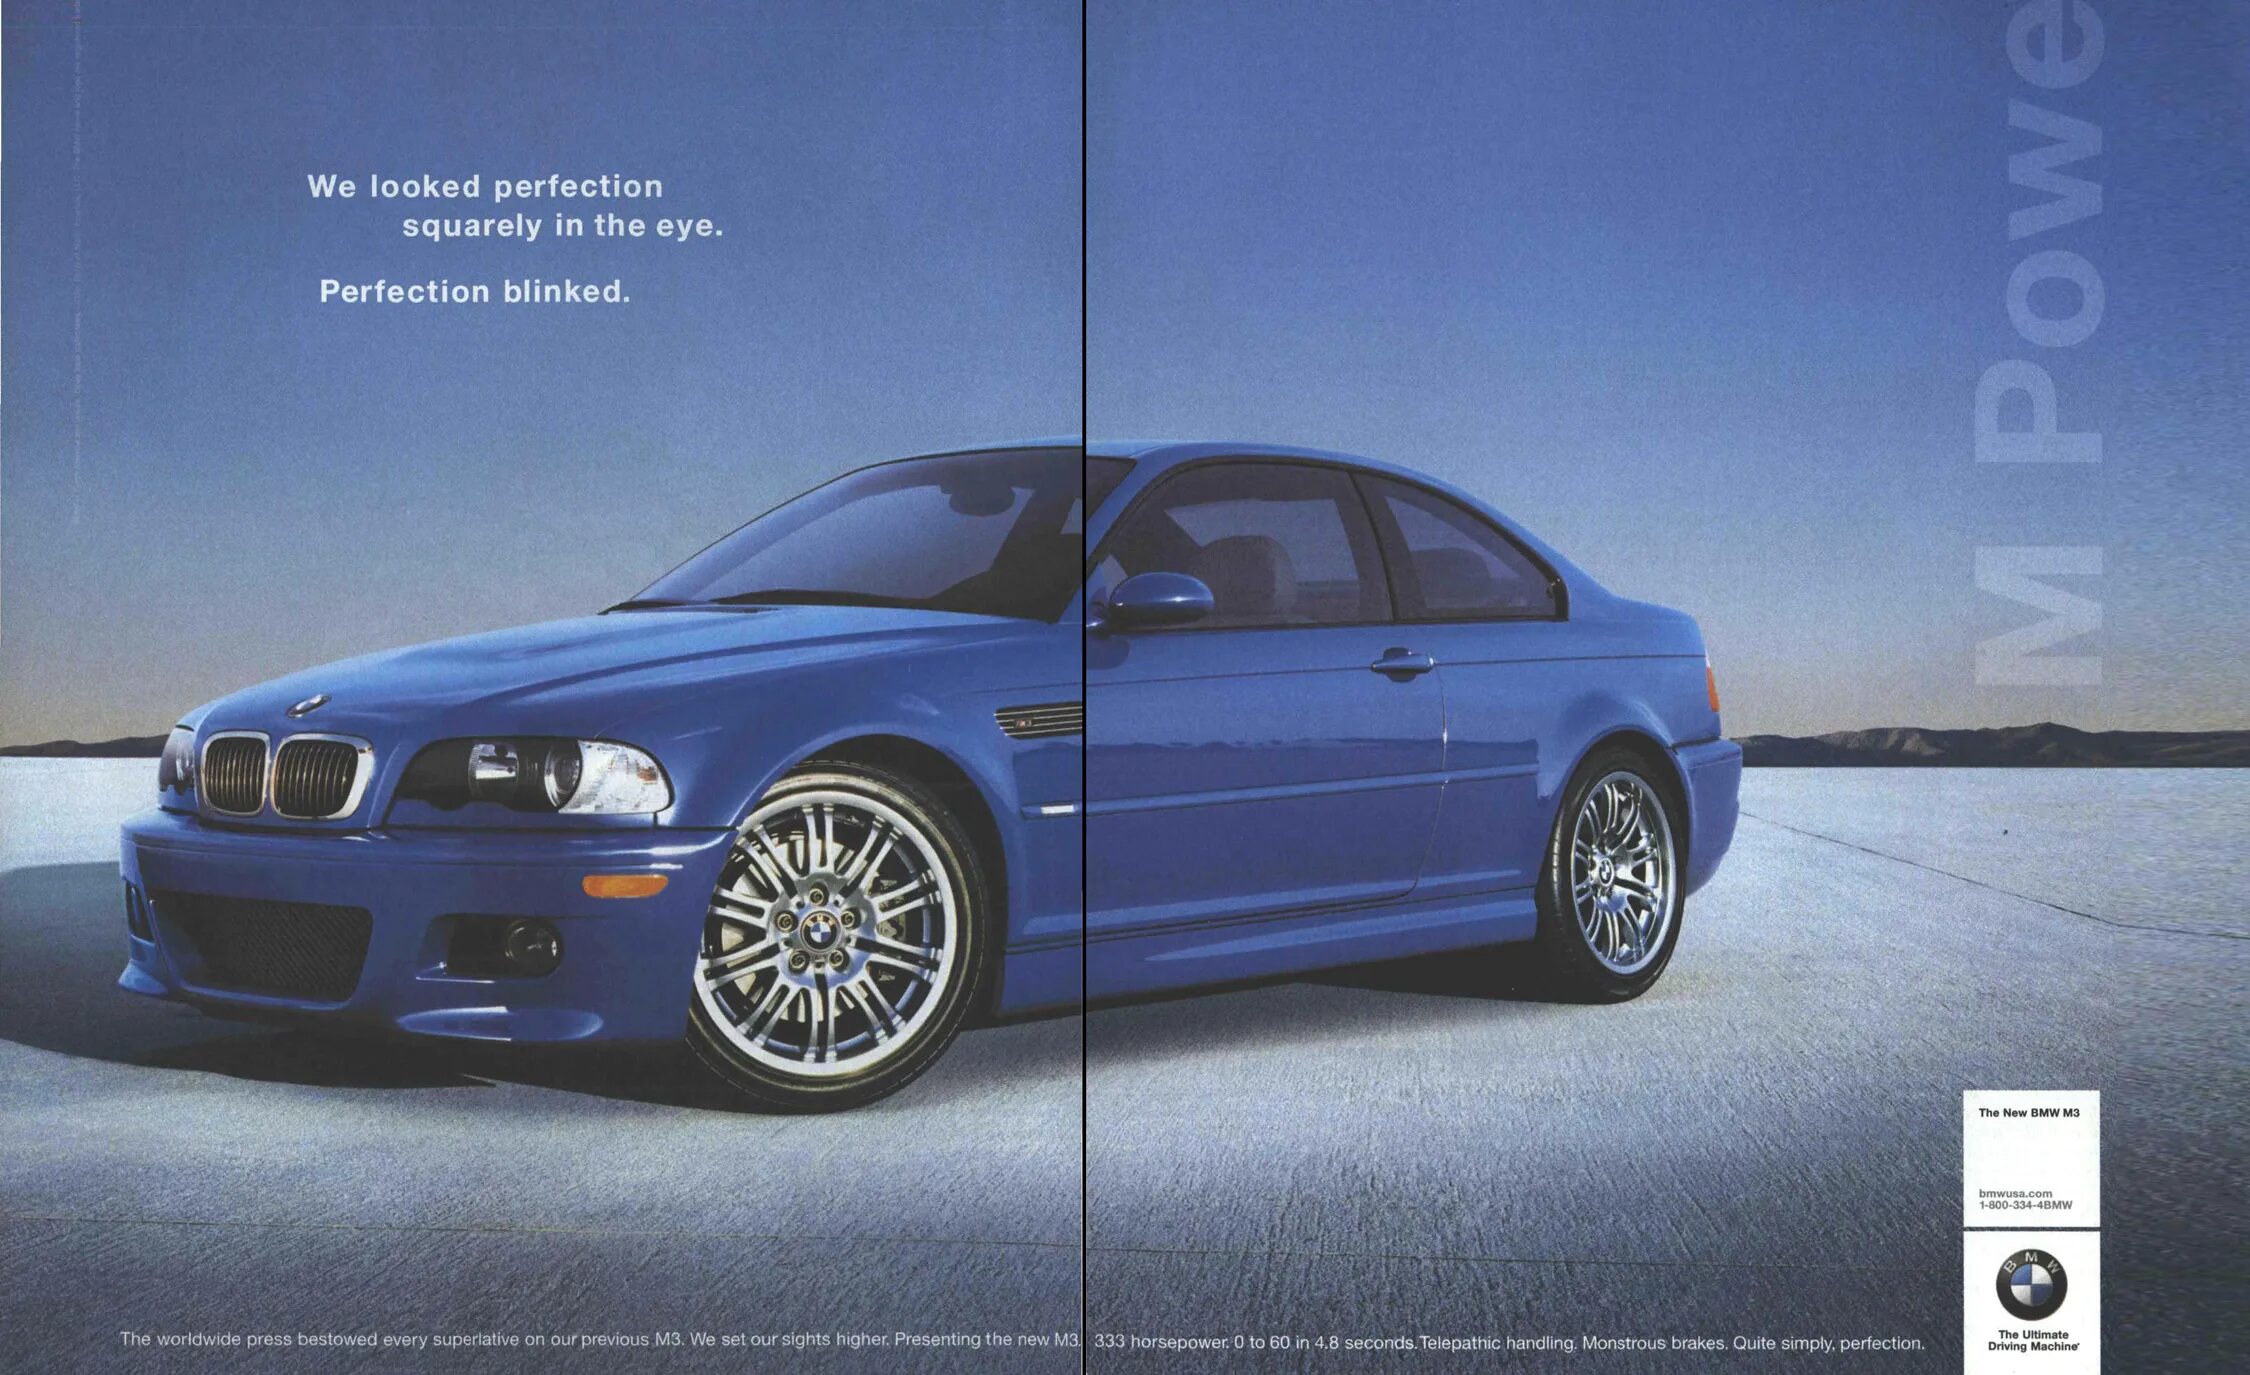 2000 Год реклама автомобиля. Реклама авто рекламы 2000. Реклама 2000-2010. Реклама из 2000.